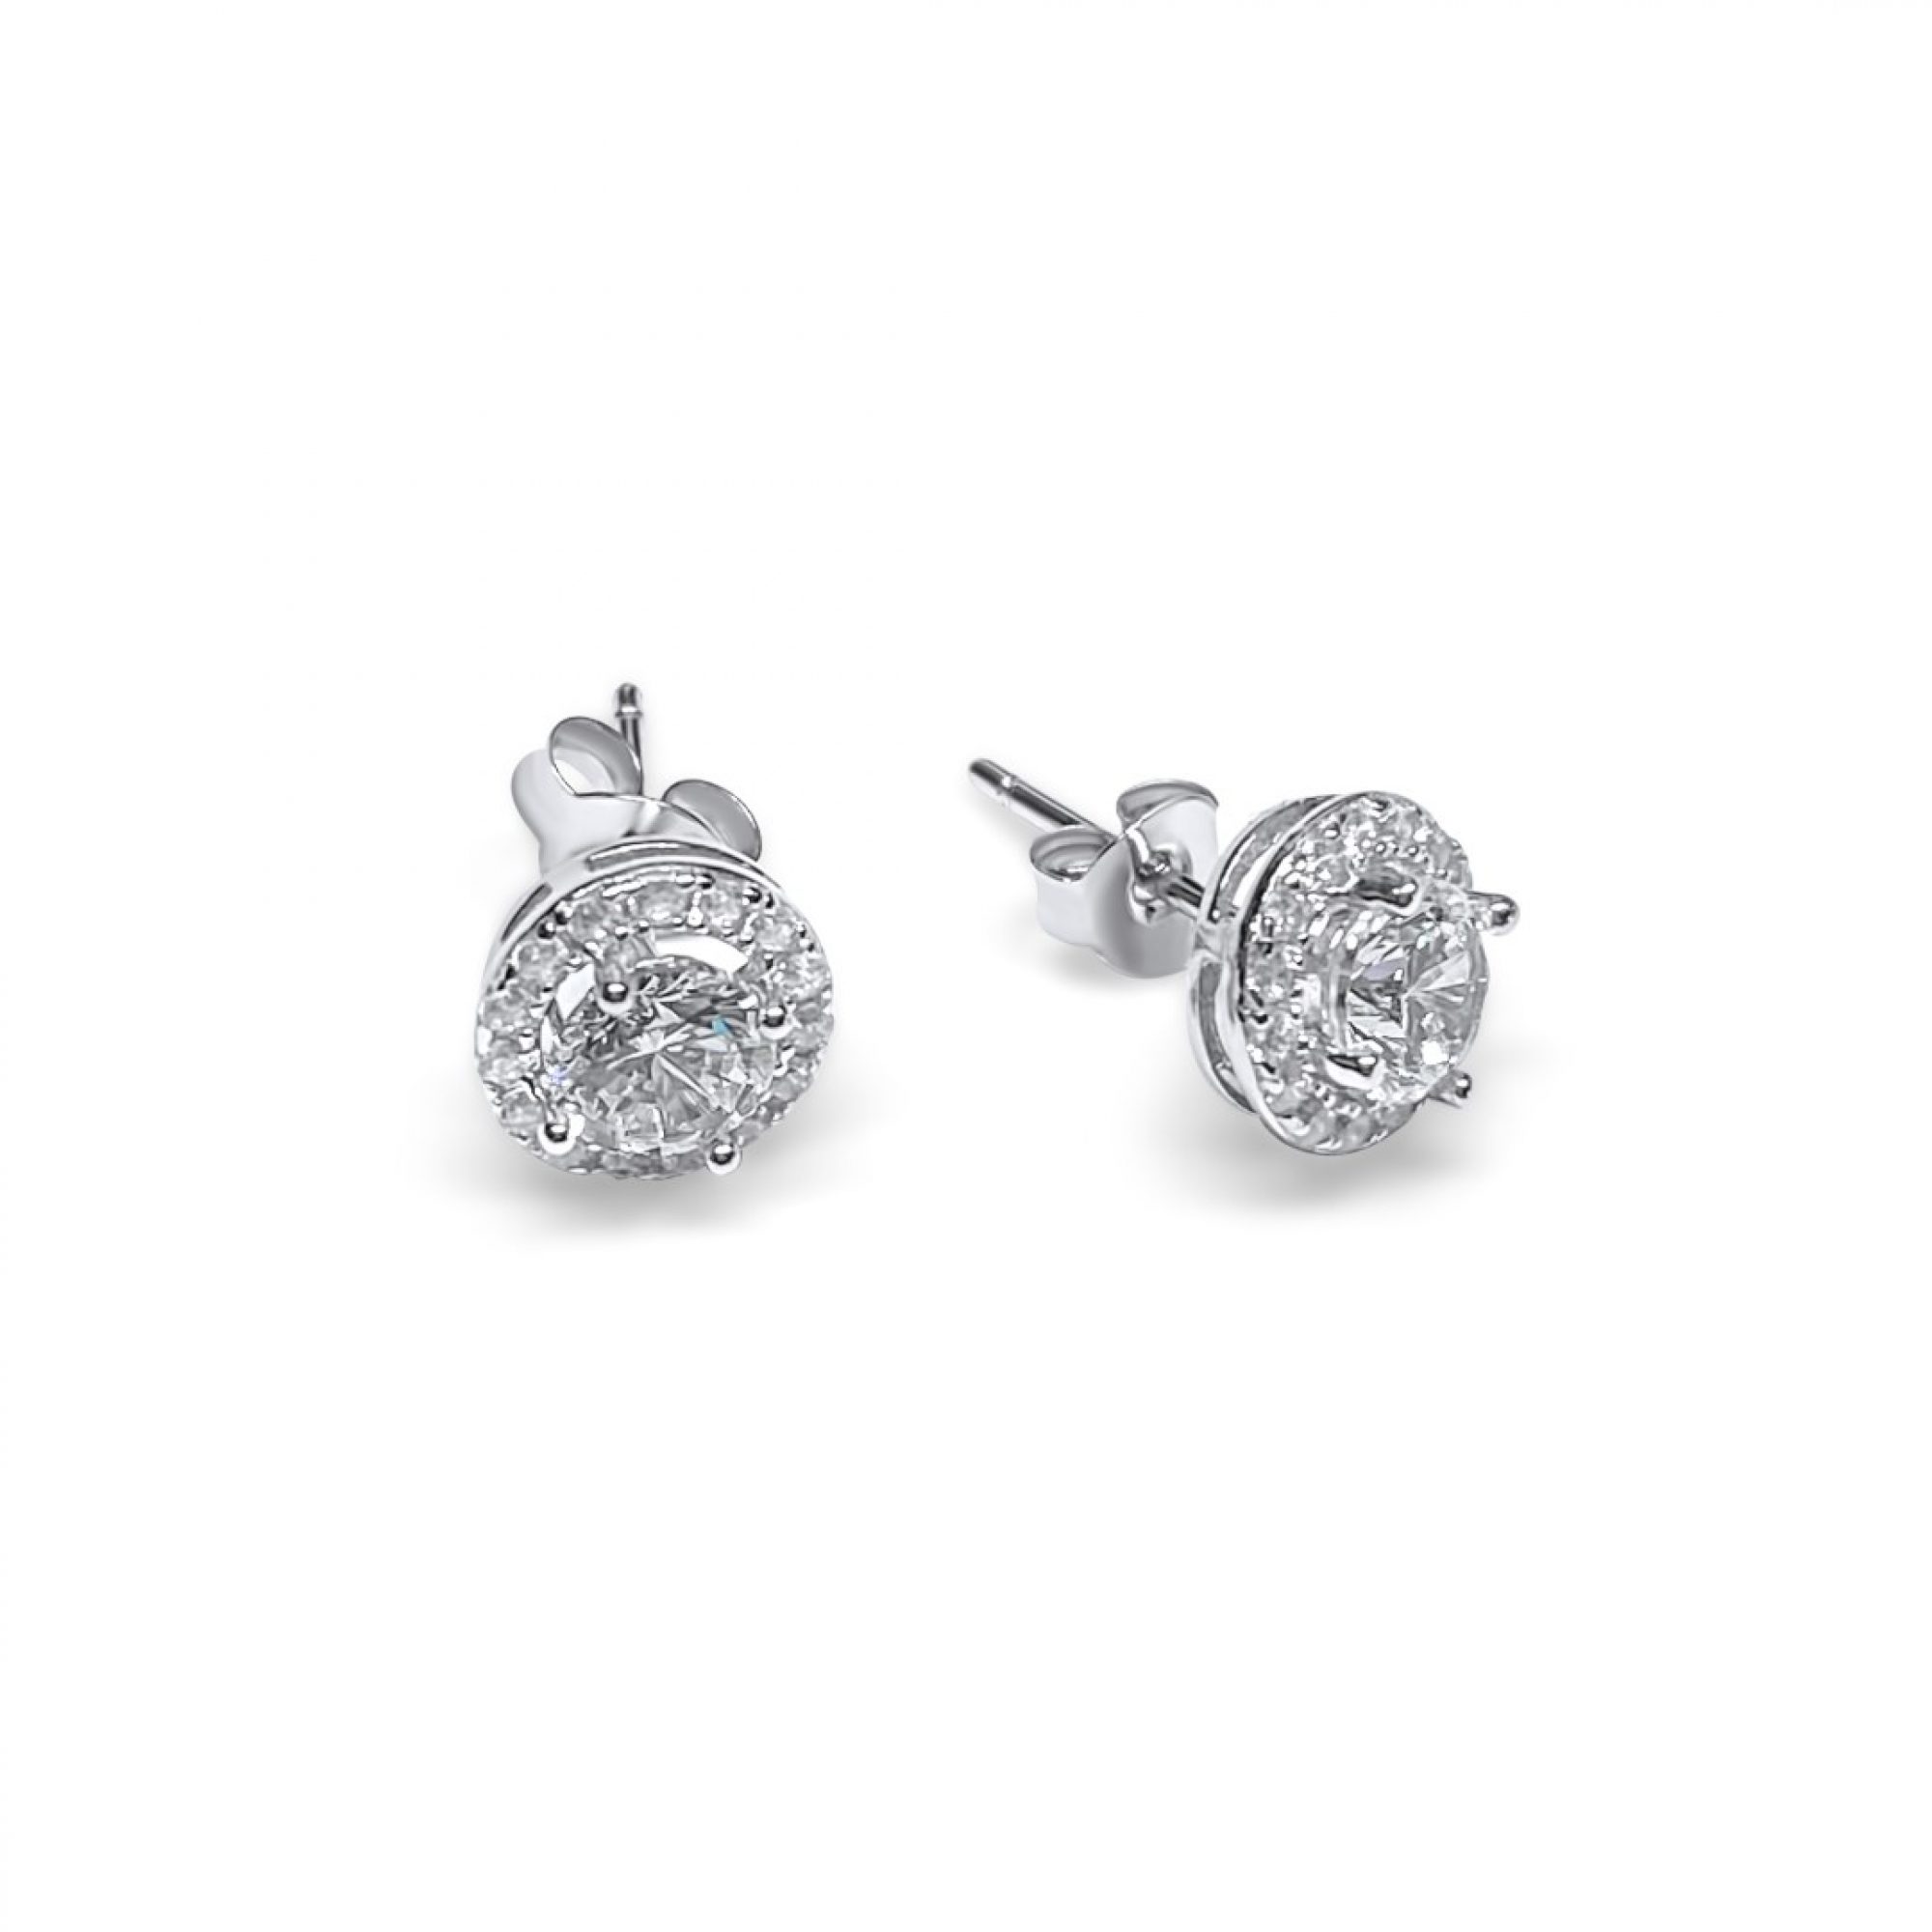 Silver stud earrings with zircon stones